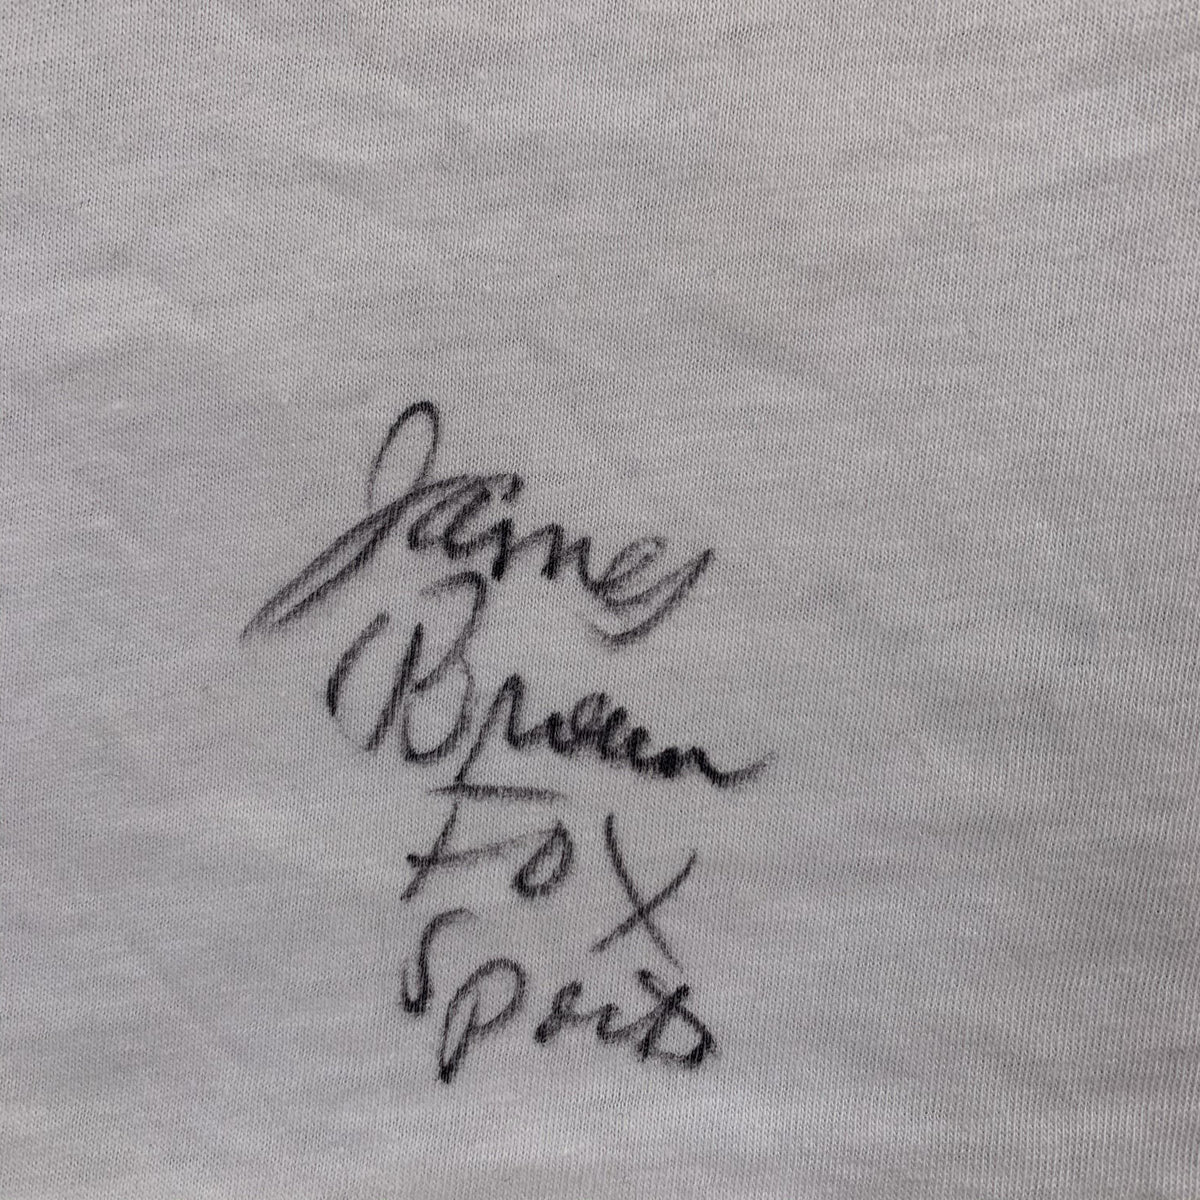 Vintage Washington Bullets “MBNA America” Autographed T-Shirt - jointcustodydc